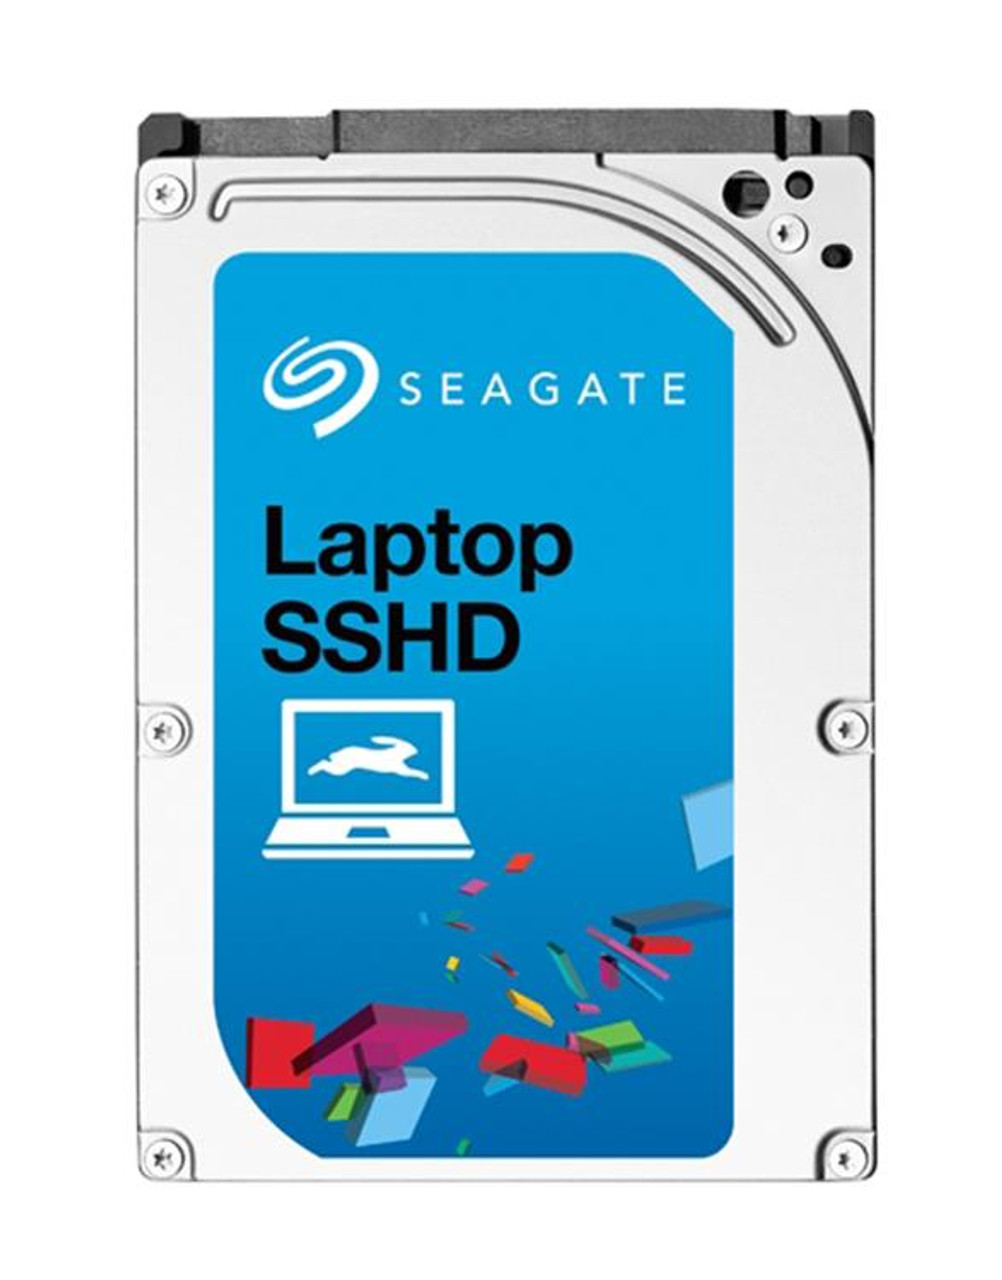 ST500LM020-50PK Seagate Laptop SSHD 500GB 5400RPM SATA 6Gbps 64MB Cache 8GB MLC NAND SSD (SED-FIPS 140-2) 2.5-inch Internal Hybrid Hard Drive (50-Pack)